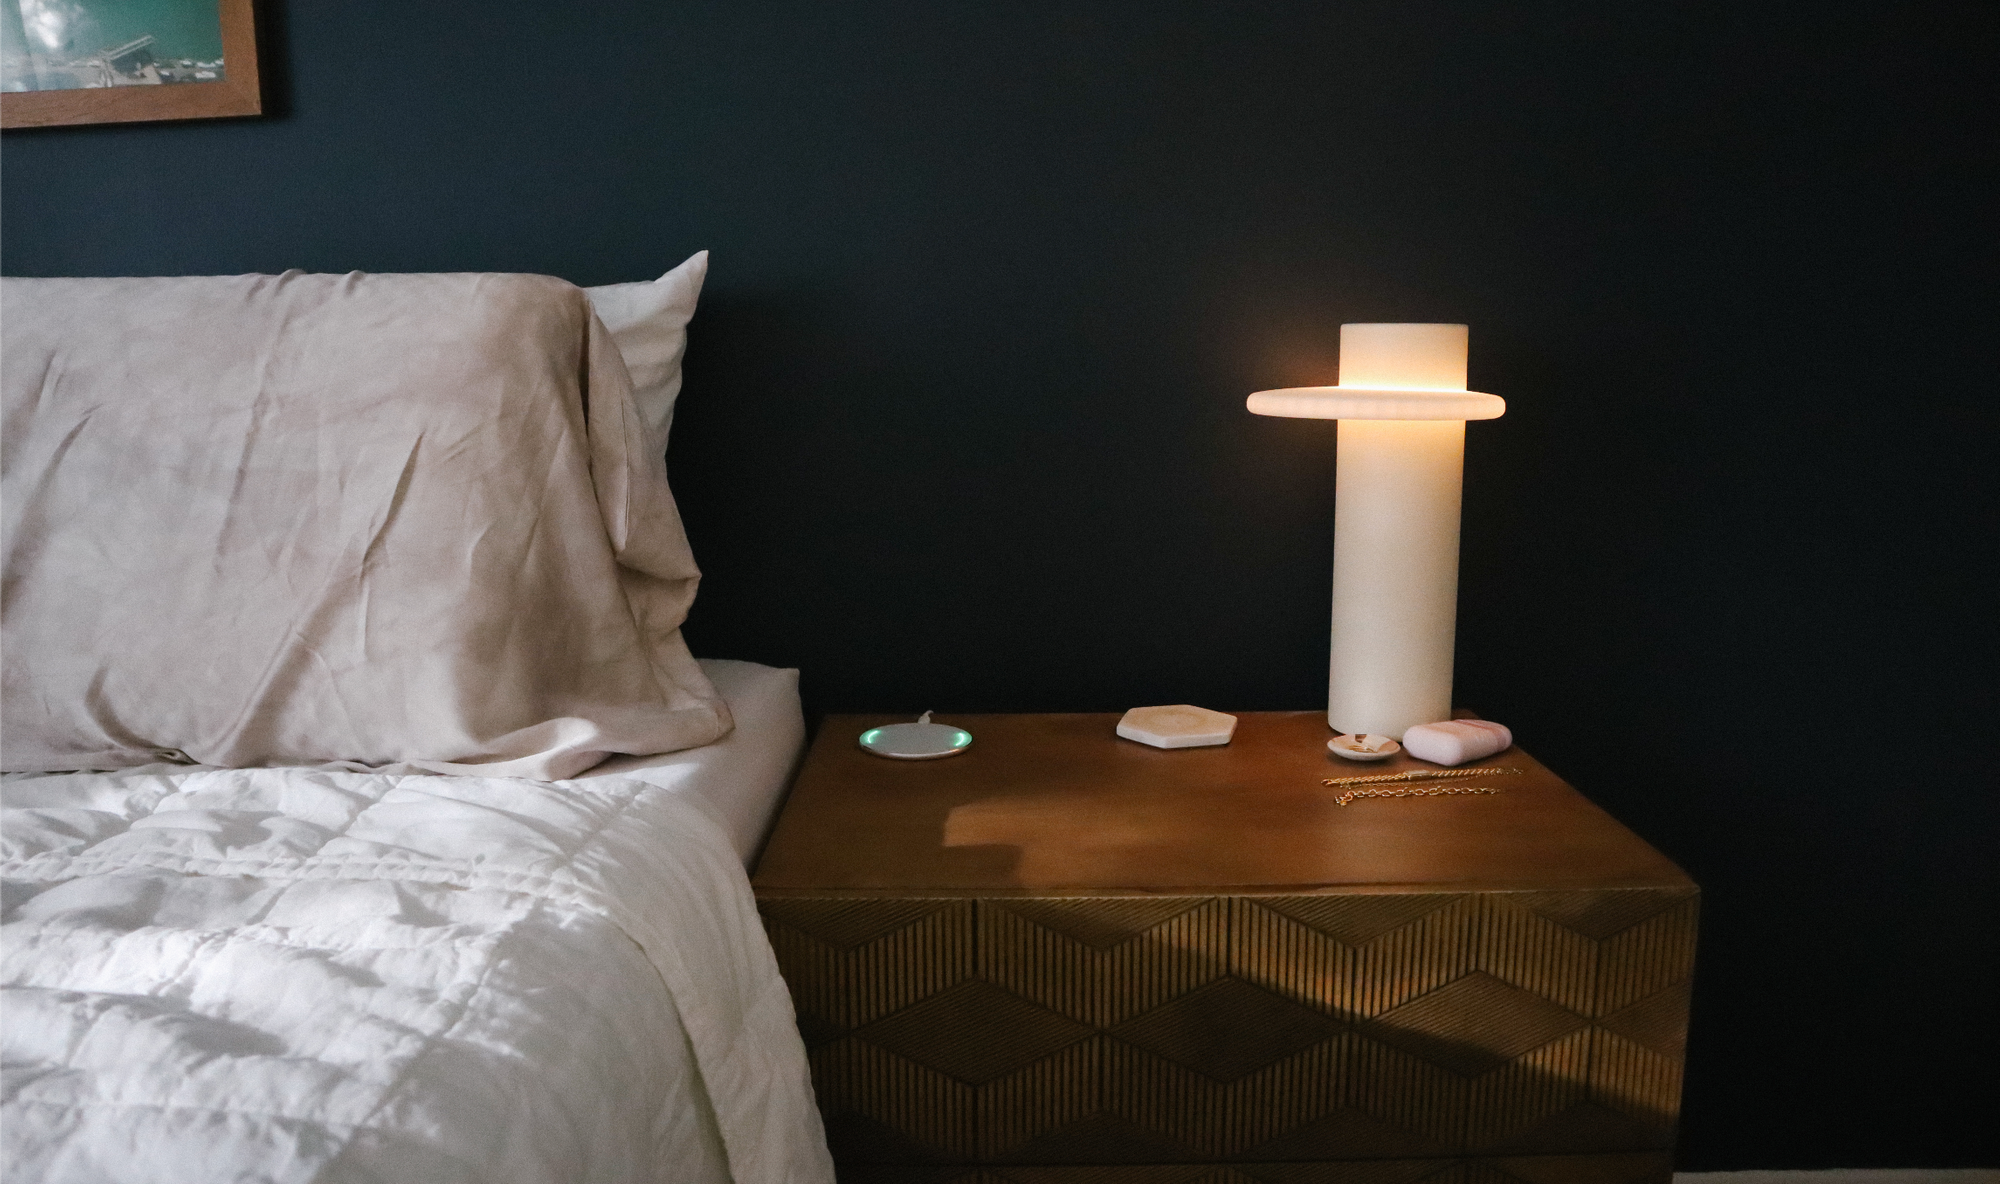 Top 5 lighting picks for your bedroom